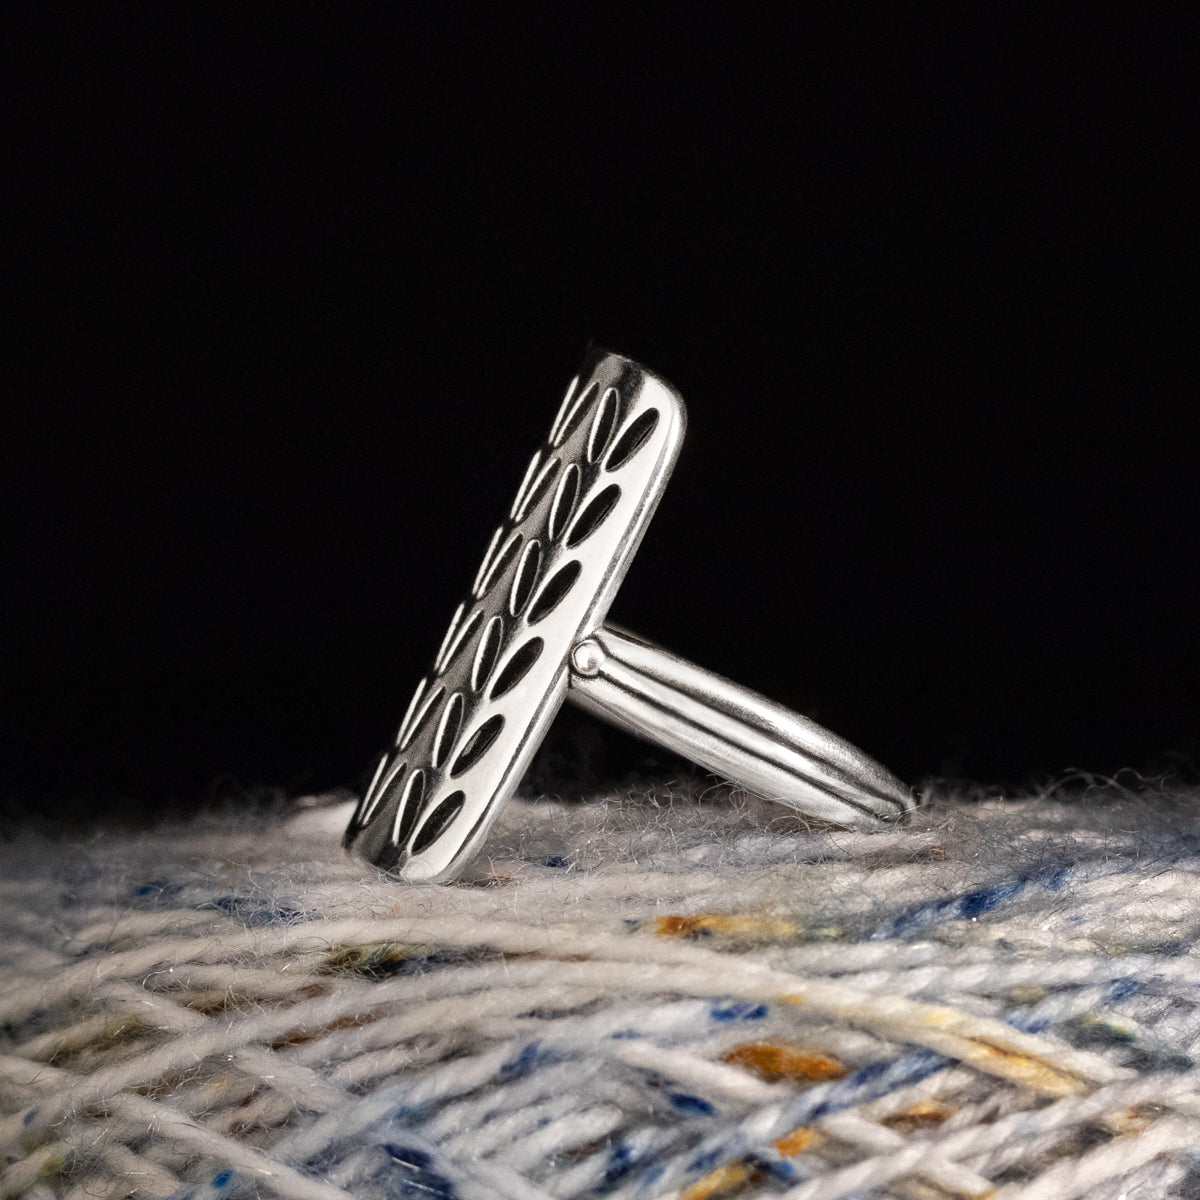 Porterness Silver Stockinette Stitch Ring with Knitting Needle Motif –  Porterness Studio